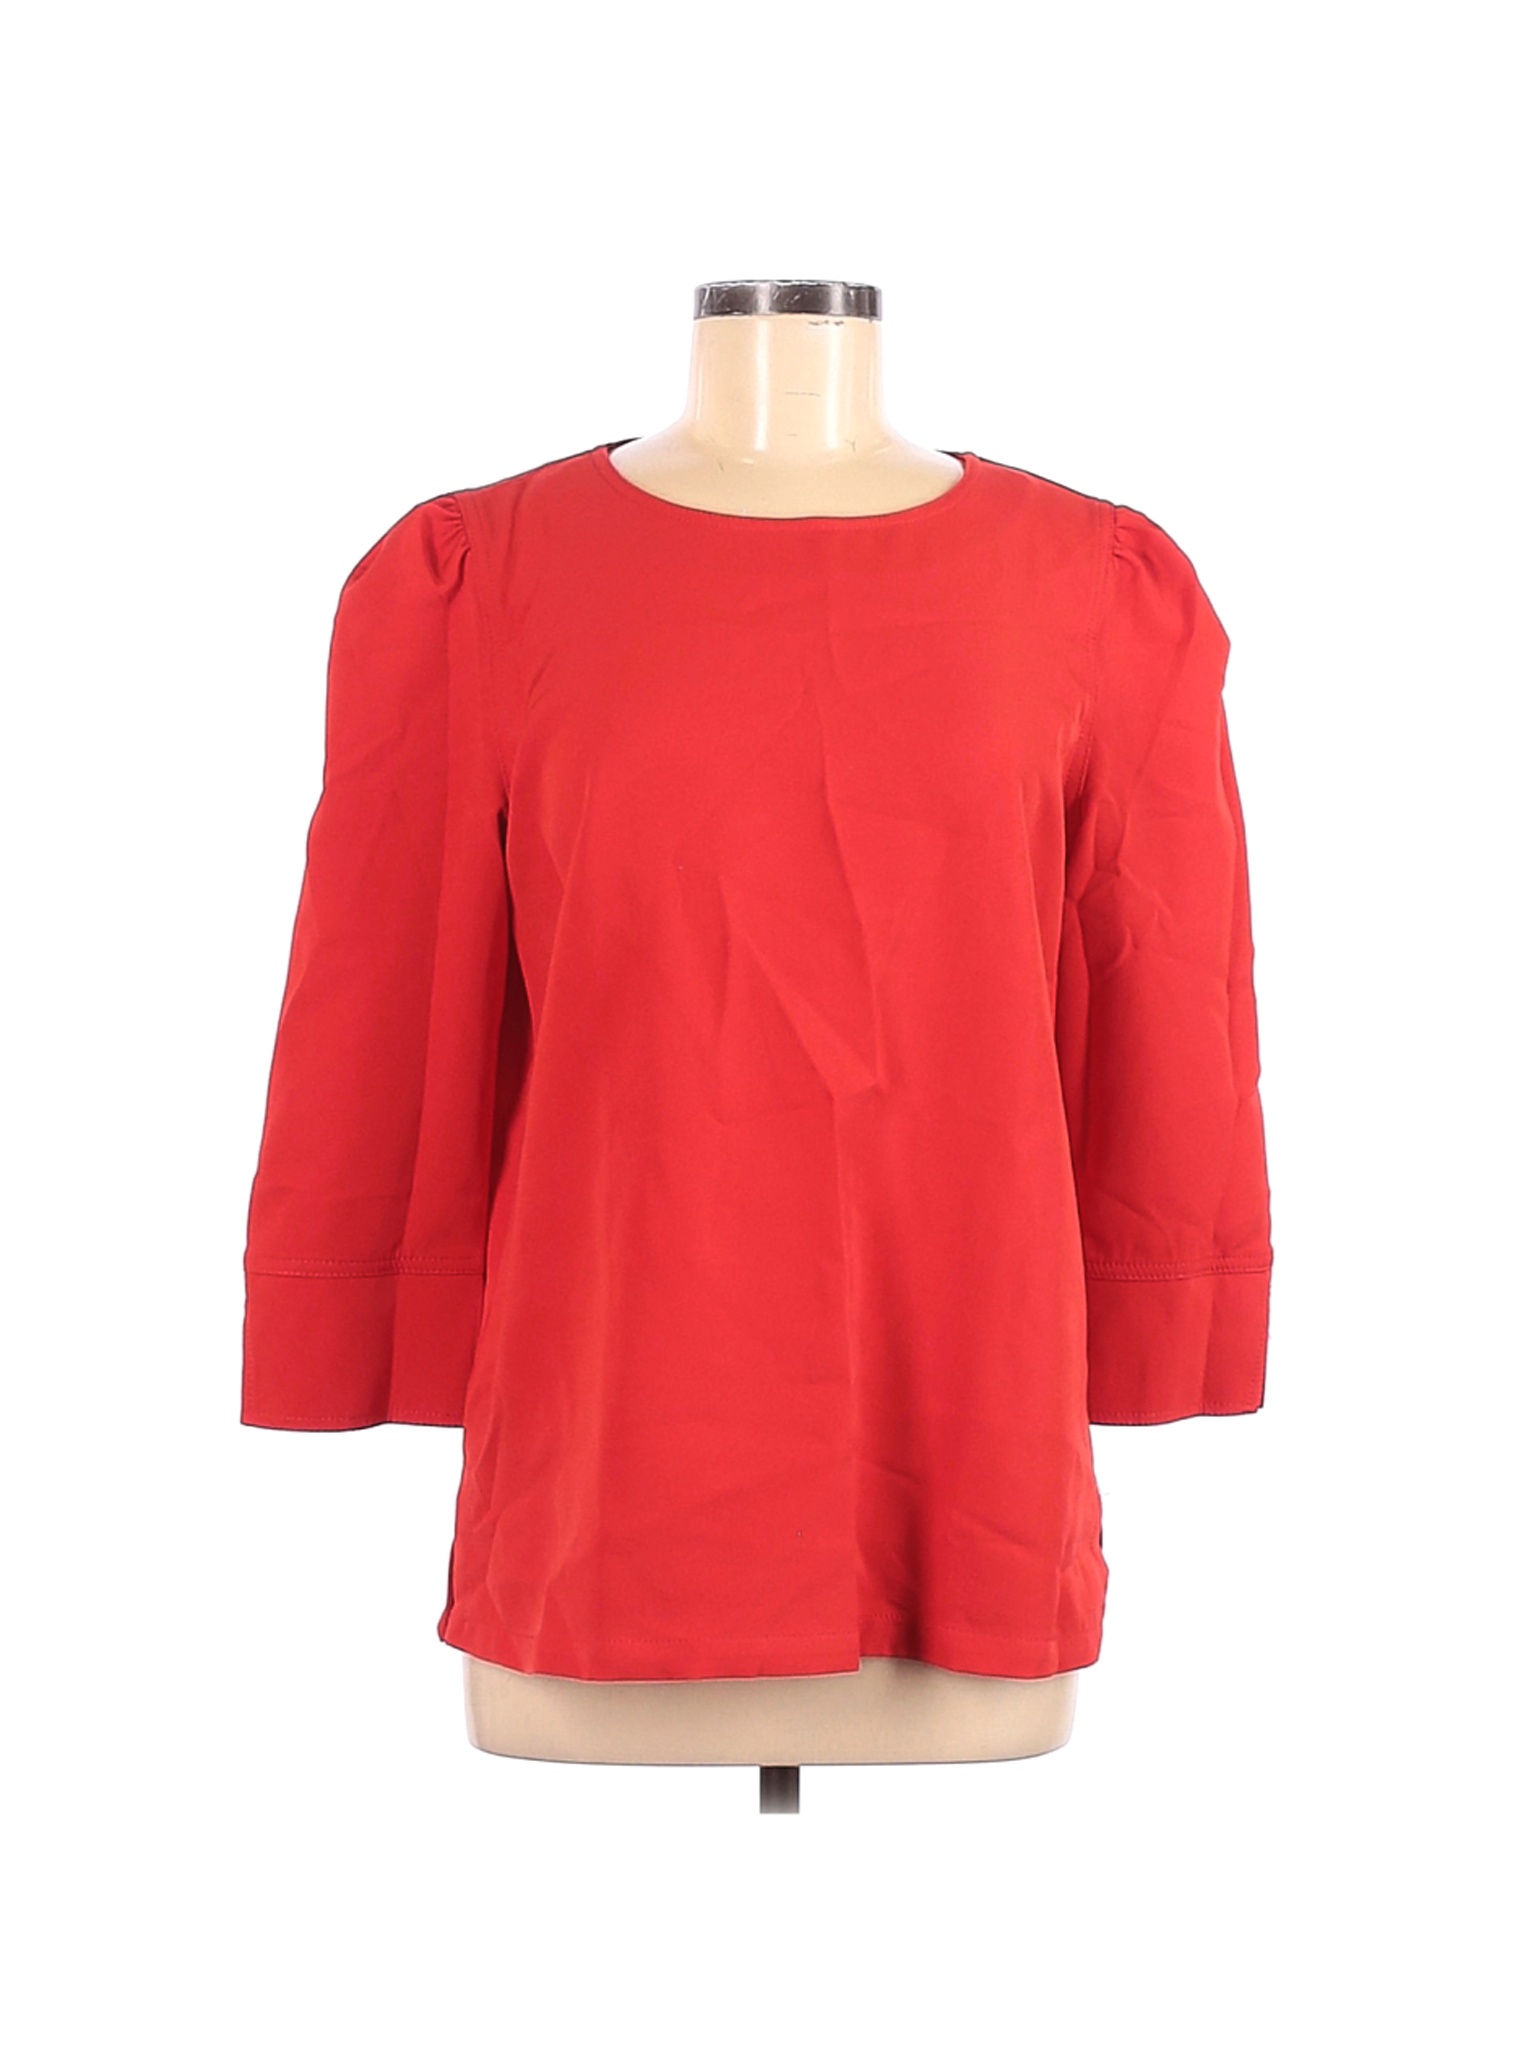 Ann Taylor LOFT Women Red 3/4 Sleeve Top M | eBay